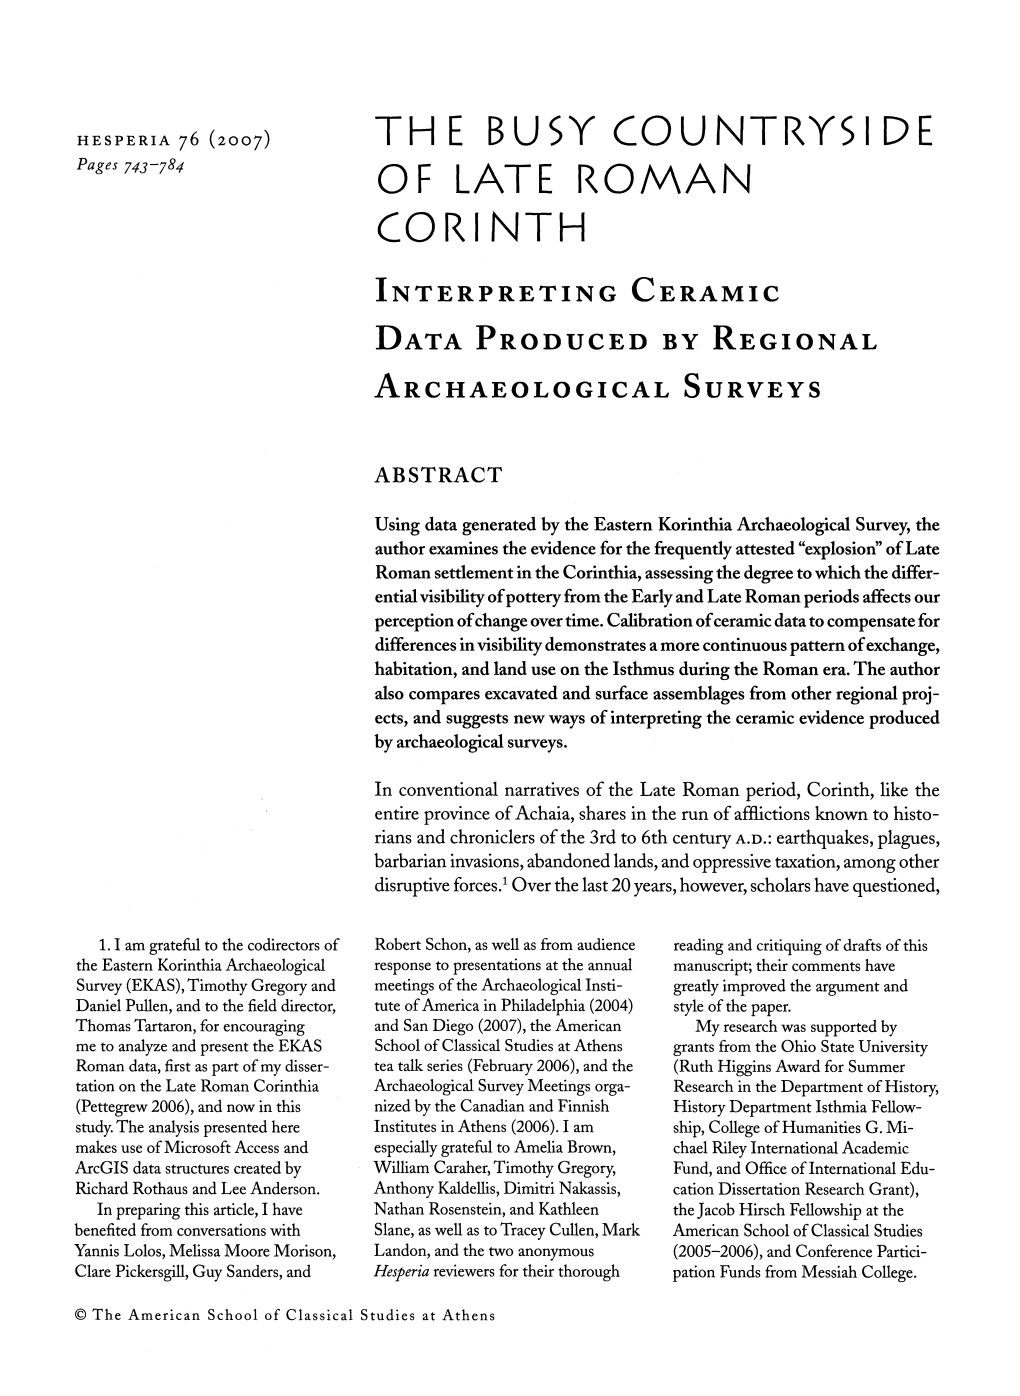 The Busy Countryside of Late Roman Corinth: Interpreting Ceramic Data